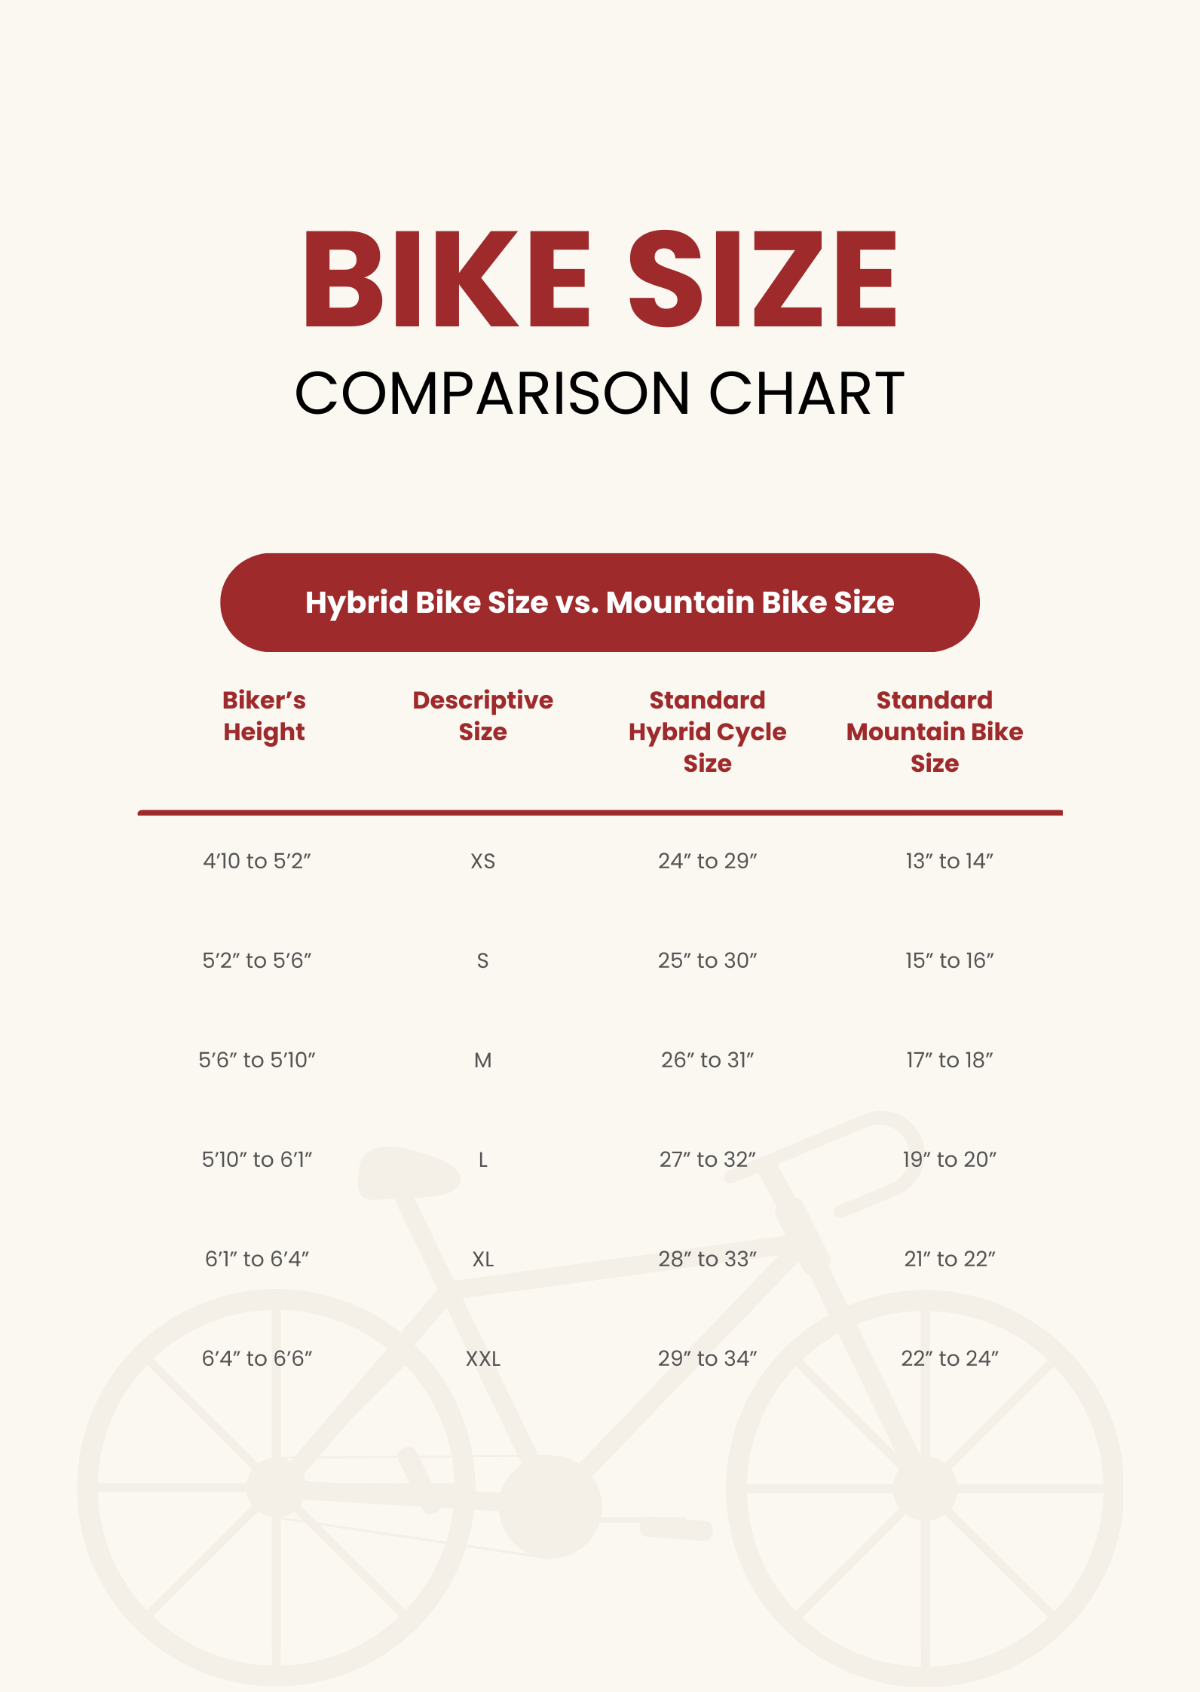 Free Bike Size Comparison Chart Template